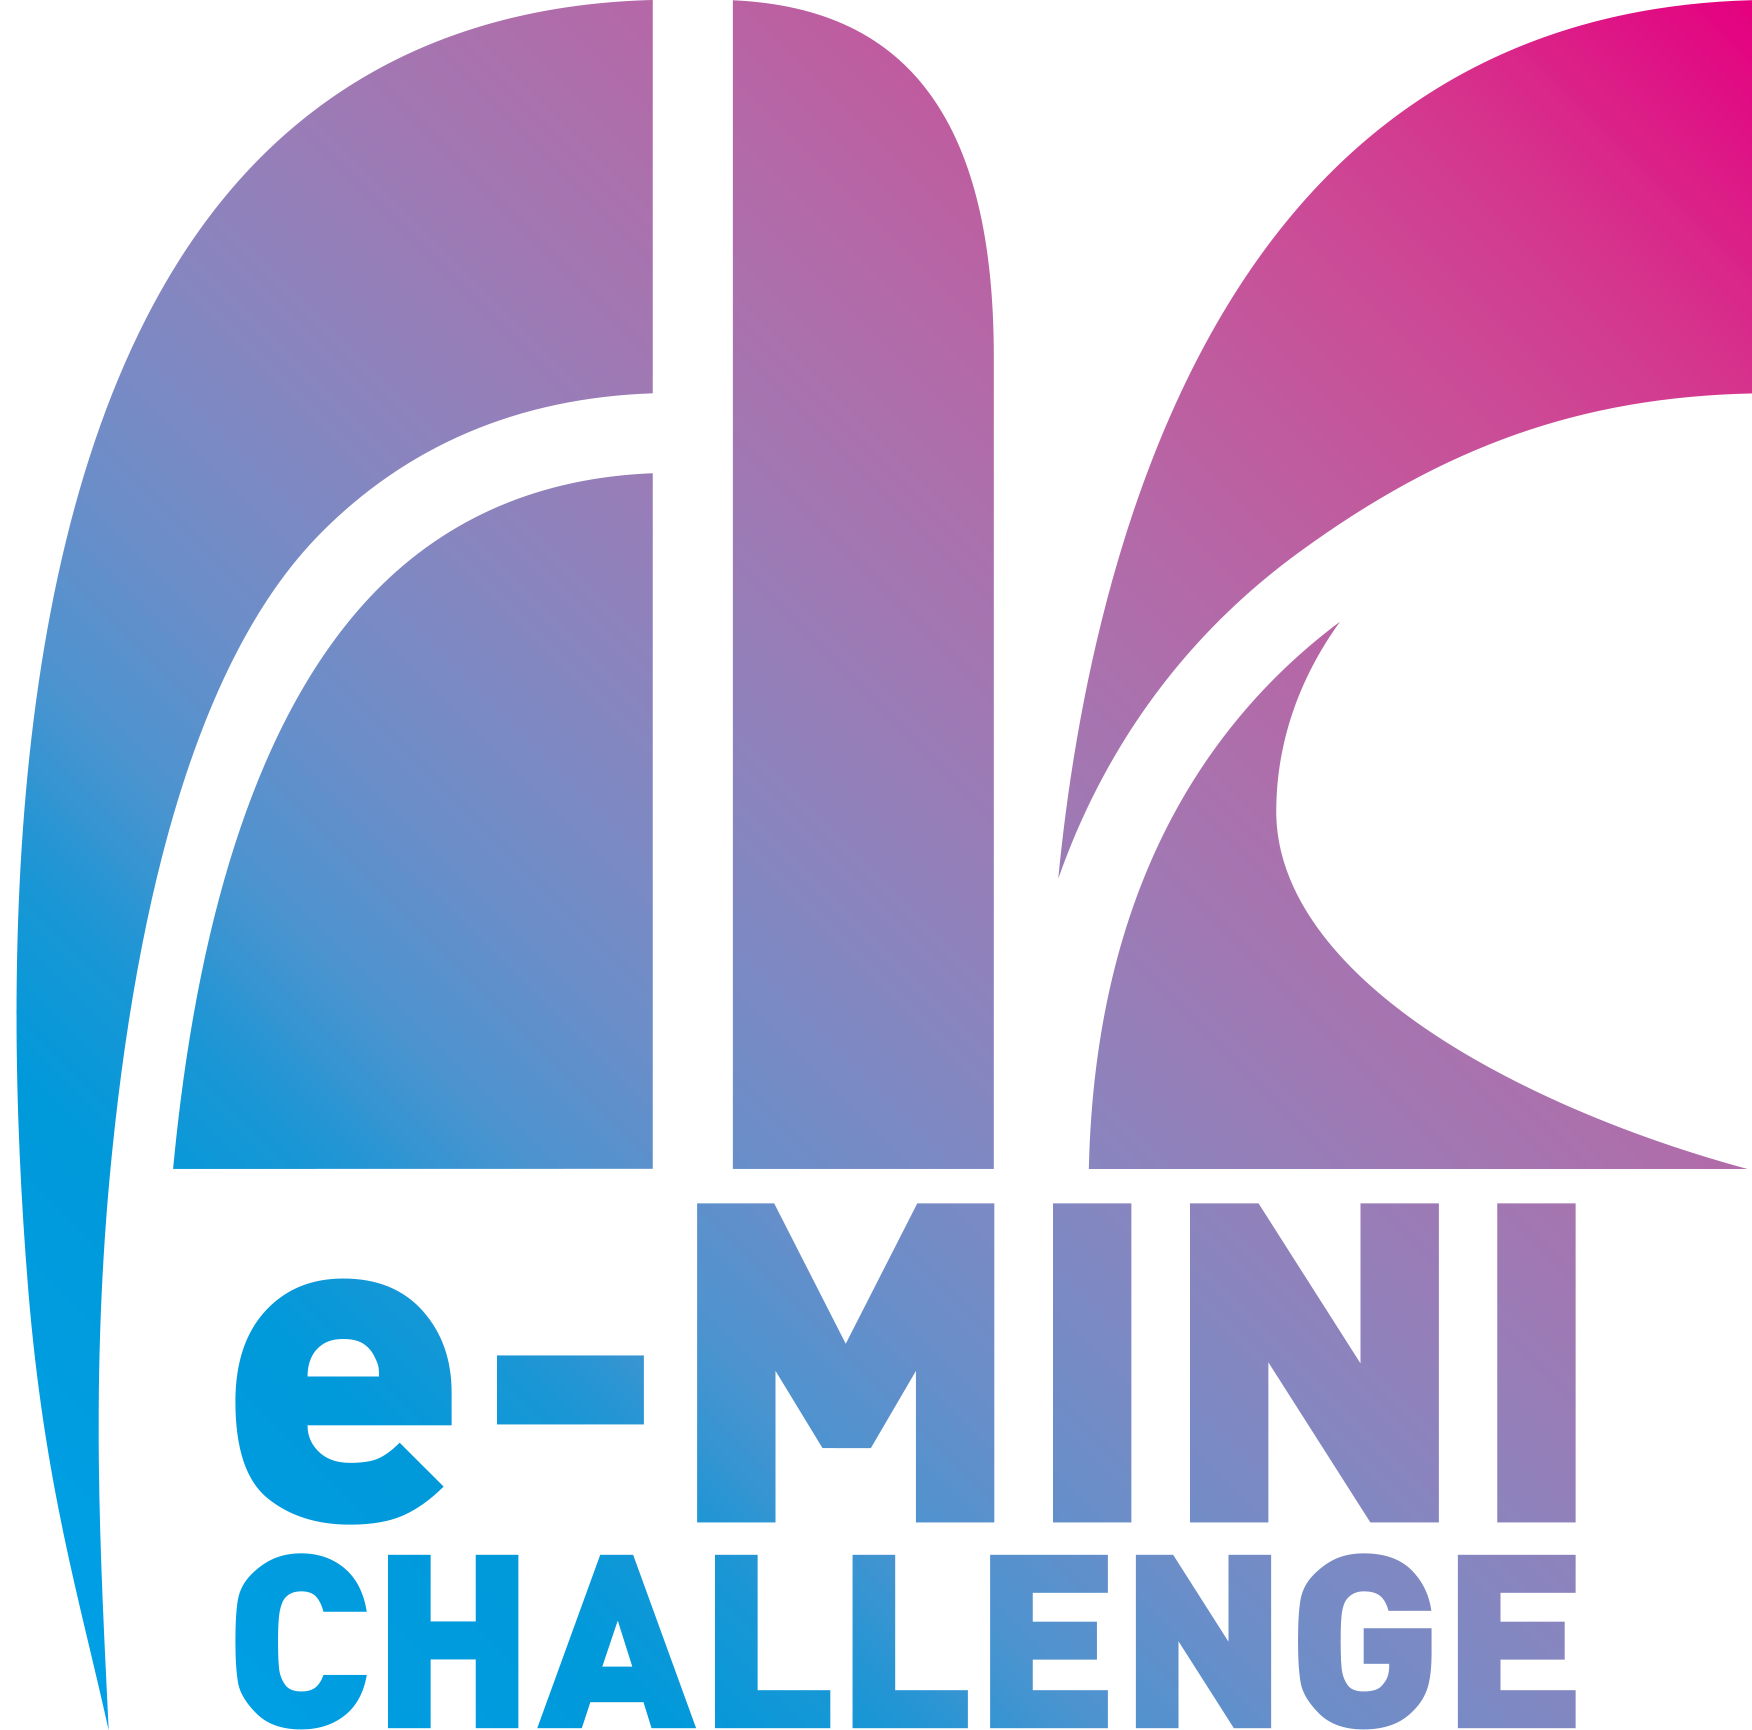 e-MINI CHALLENGE® 2021 S2 Rd.8 A/B ポイントランキング公開